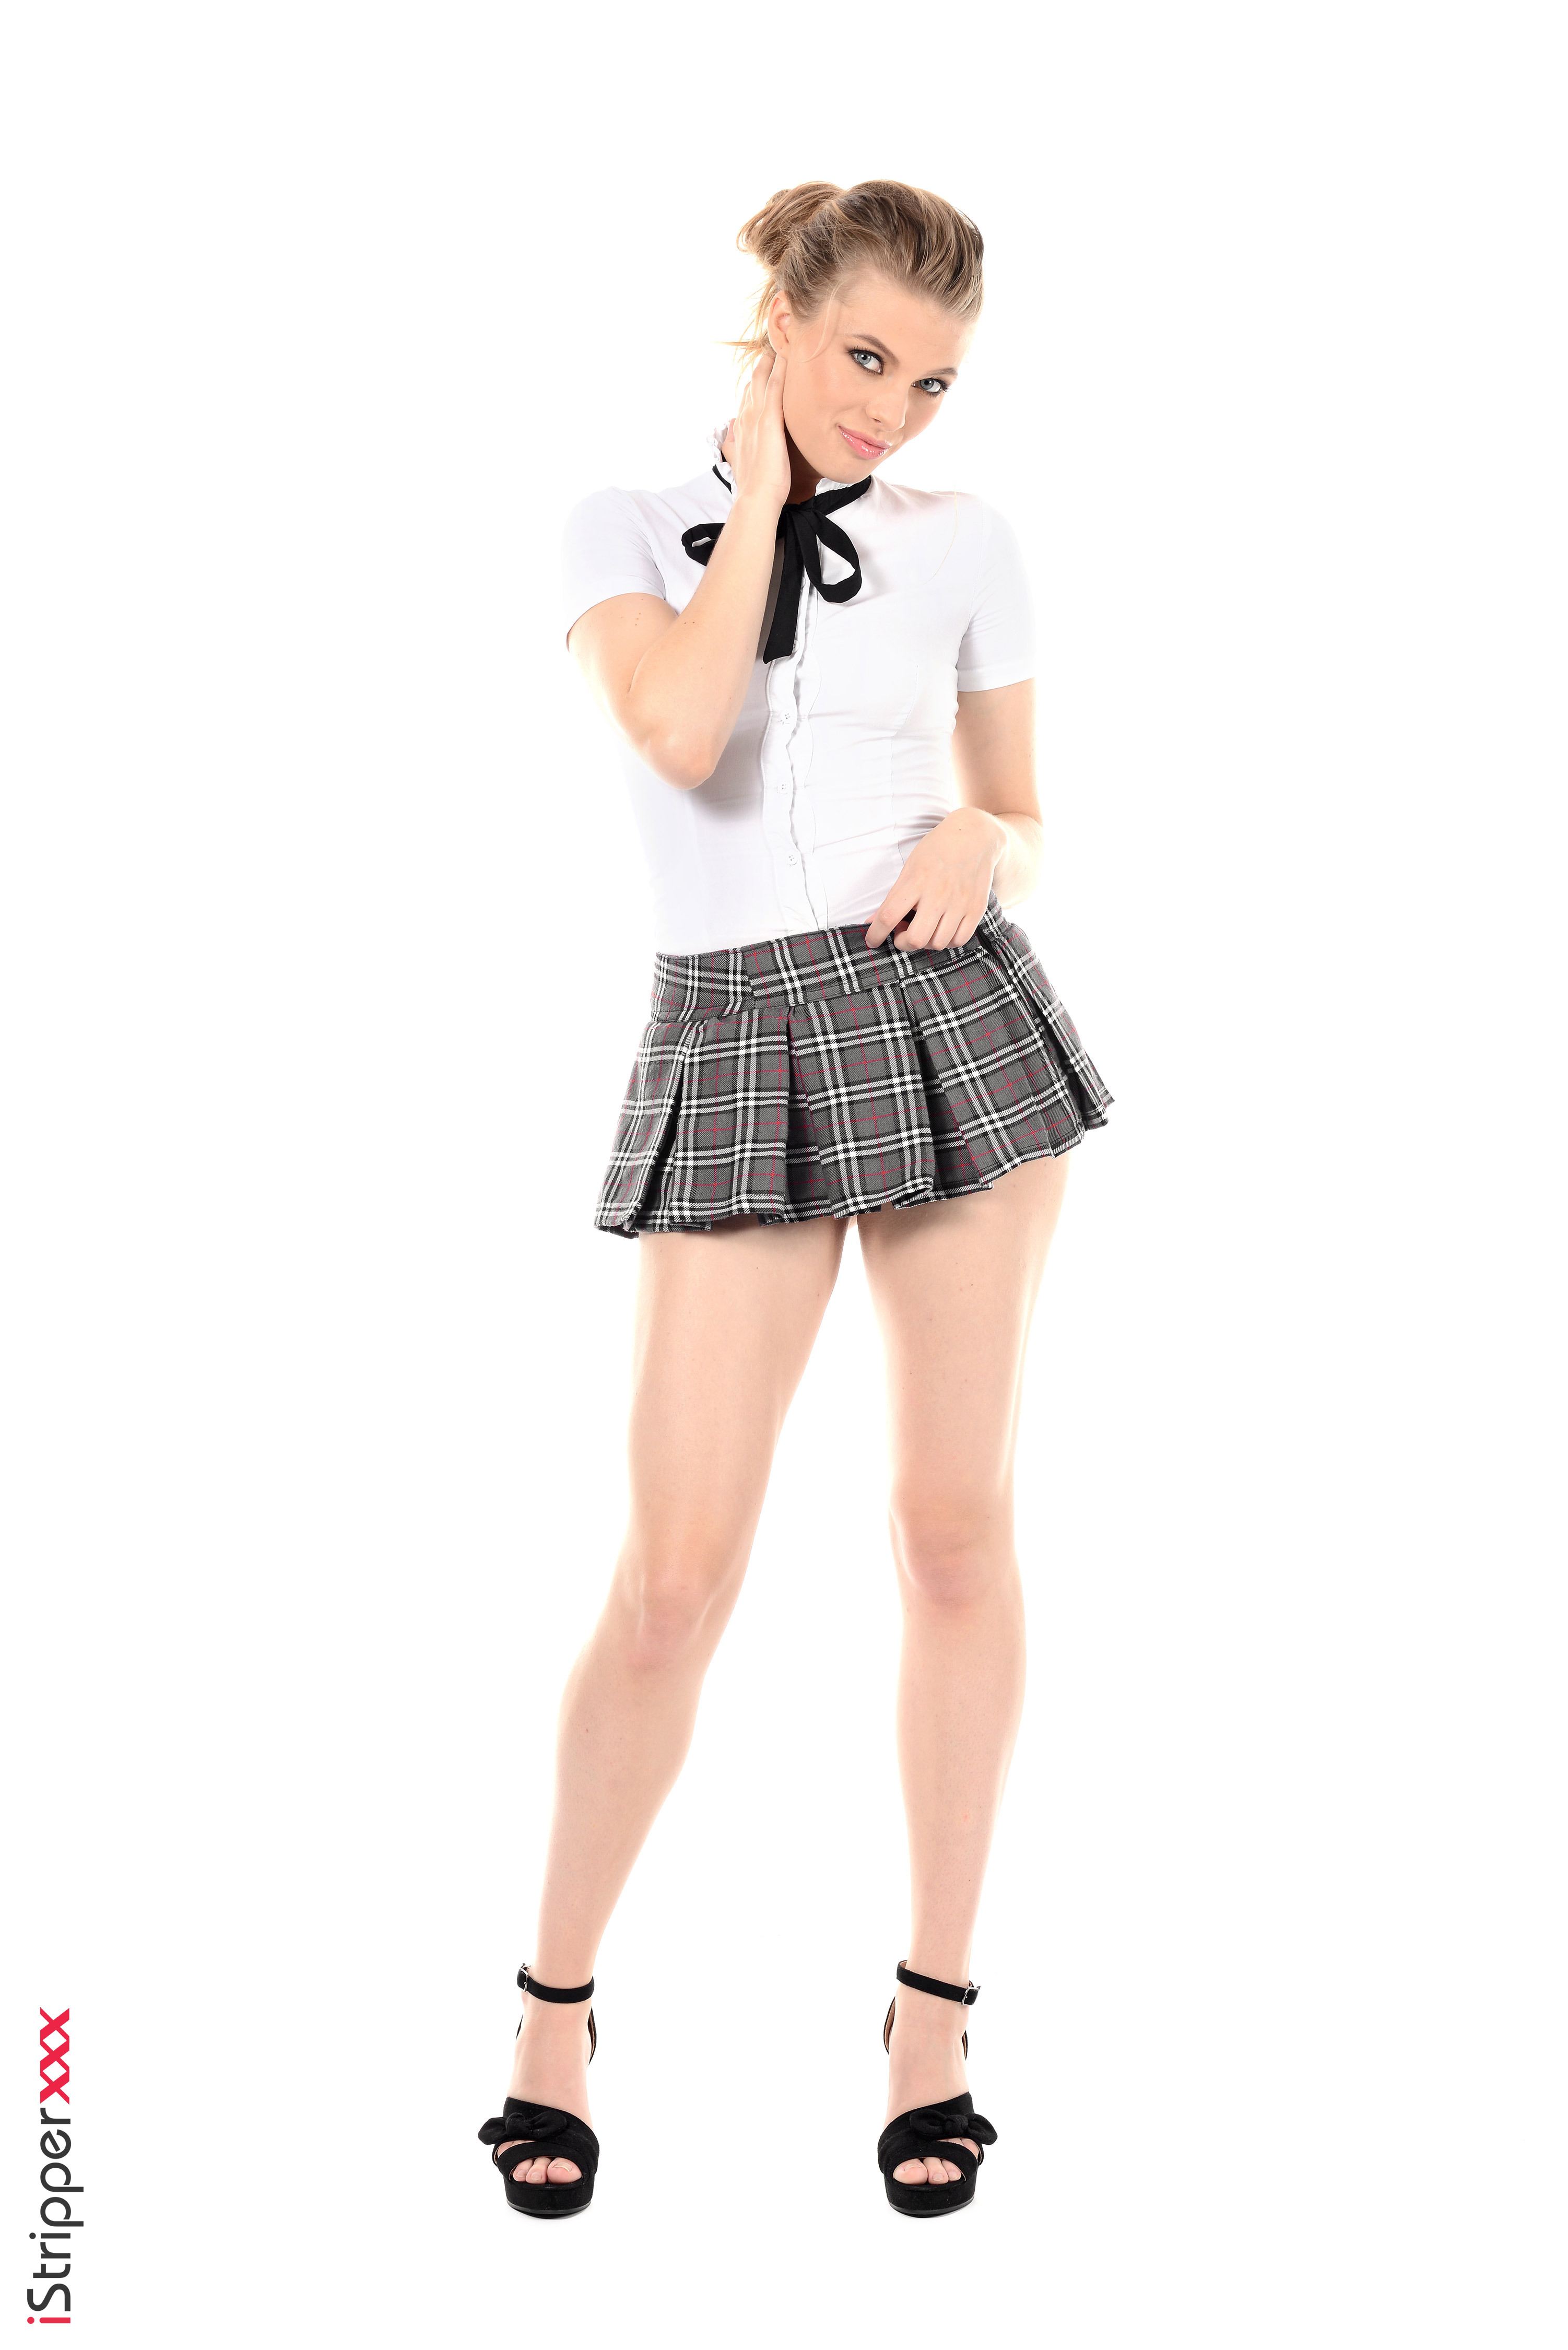 Sexy Blonde School Girl Stripper Scrolller